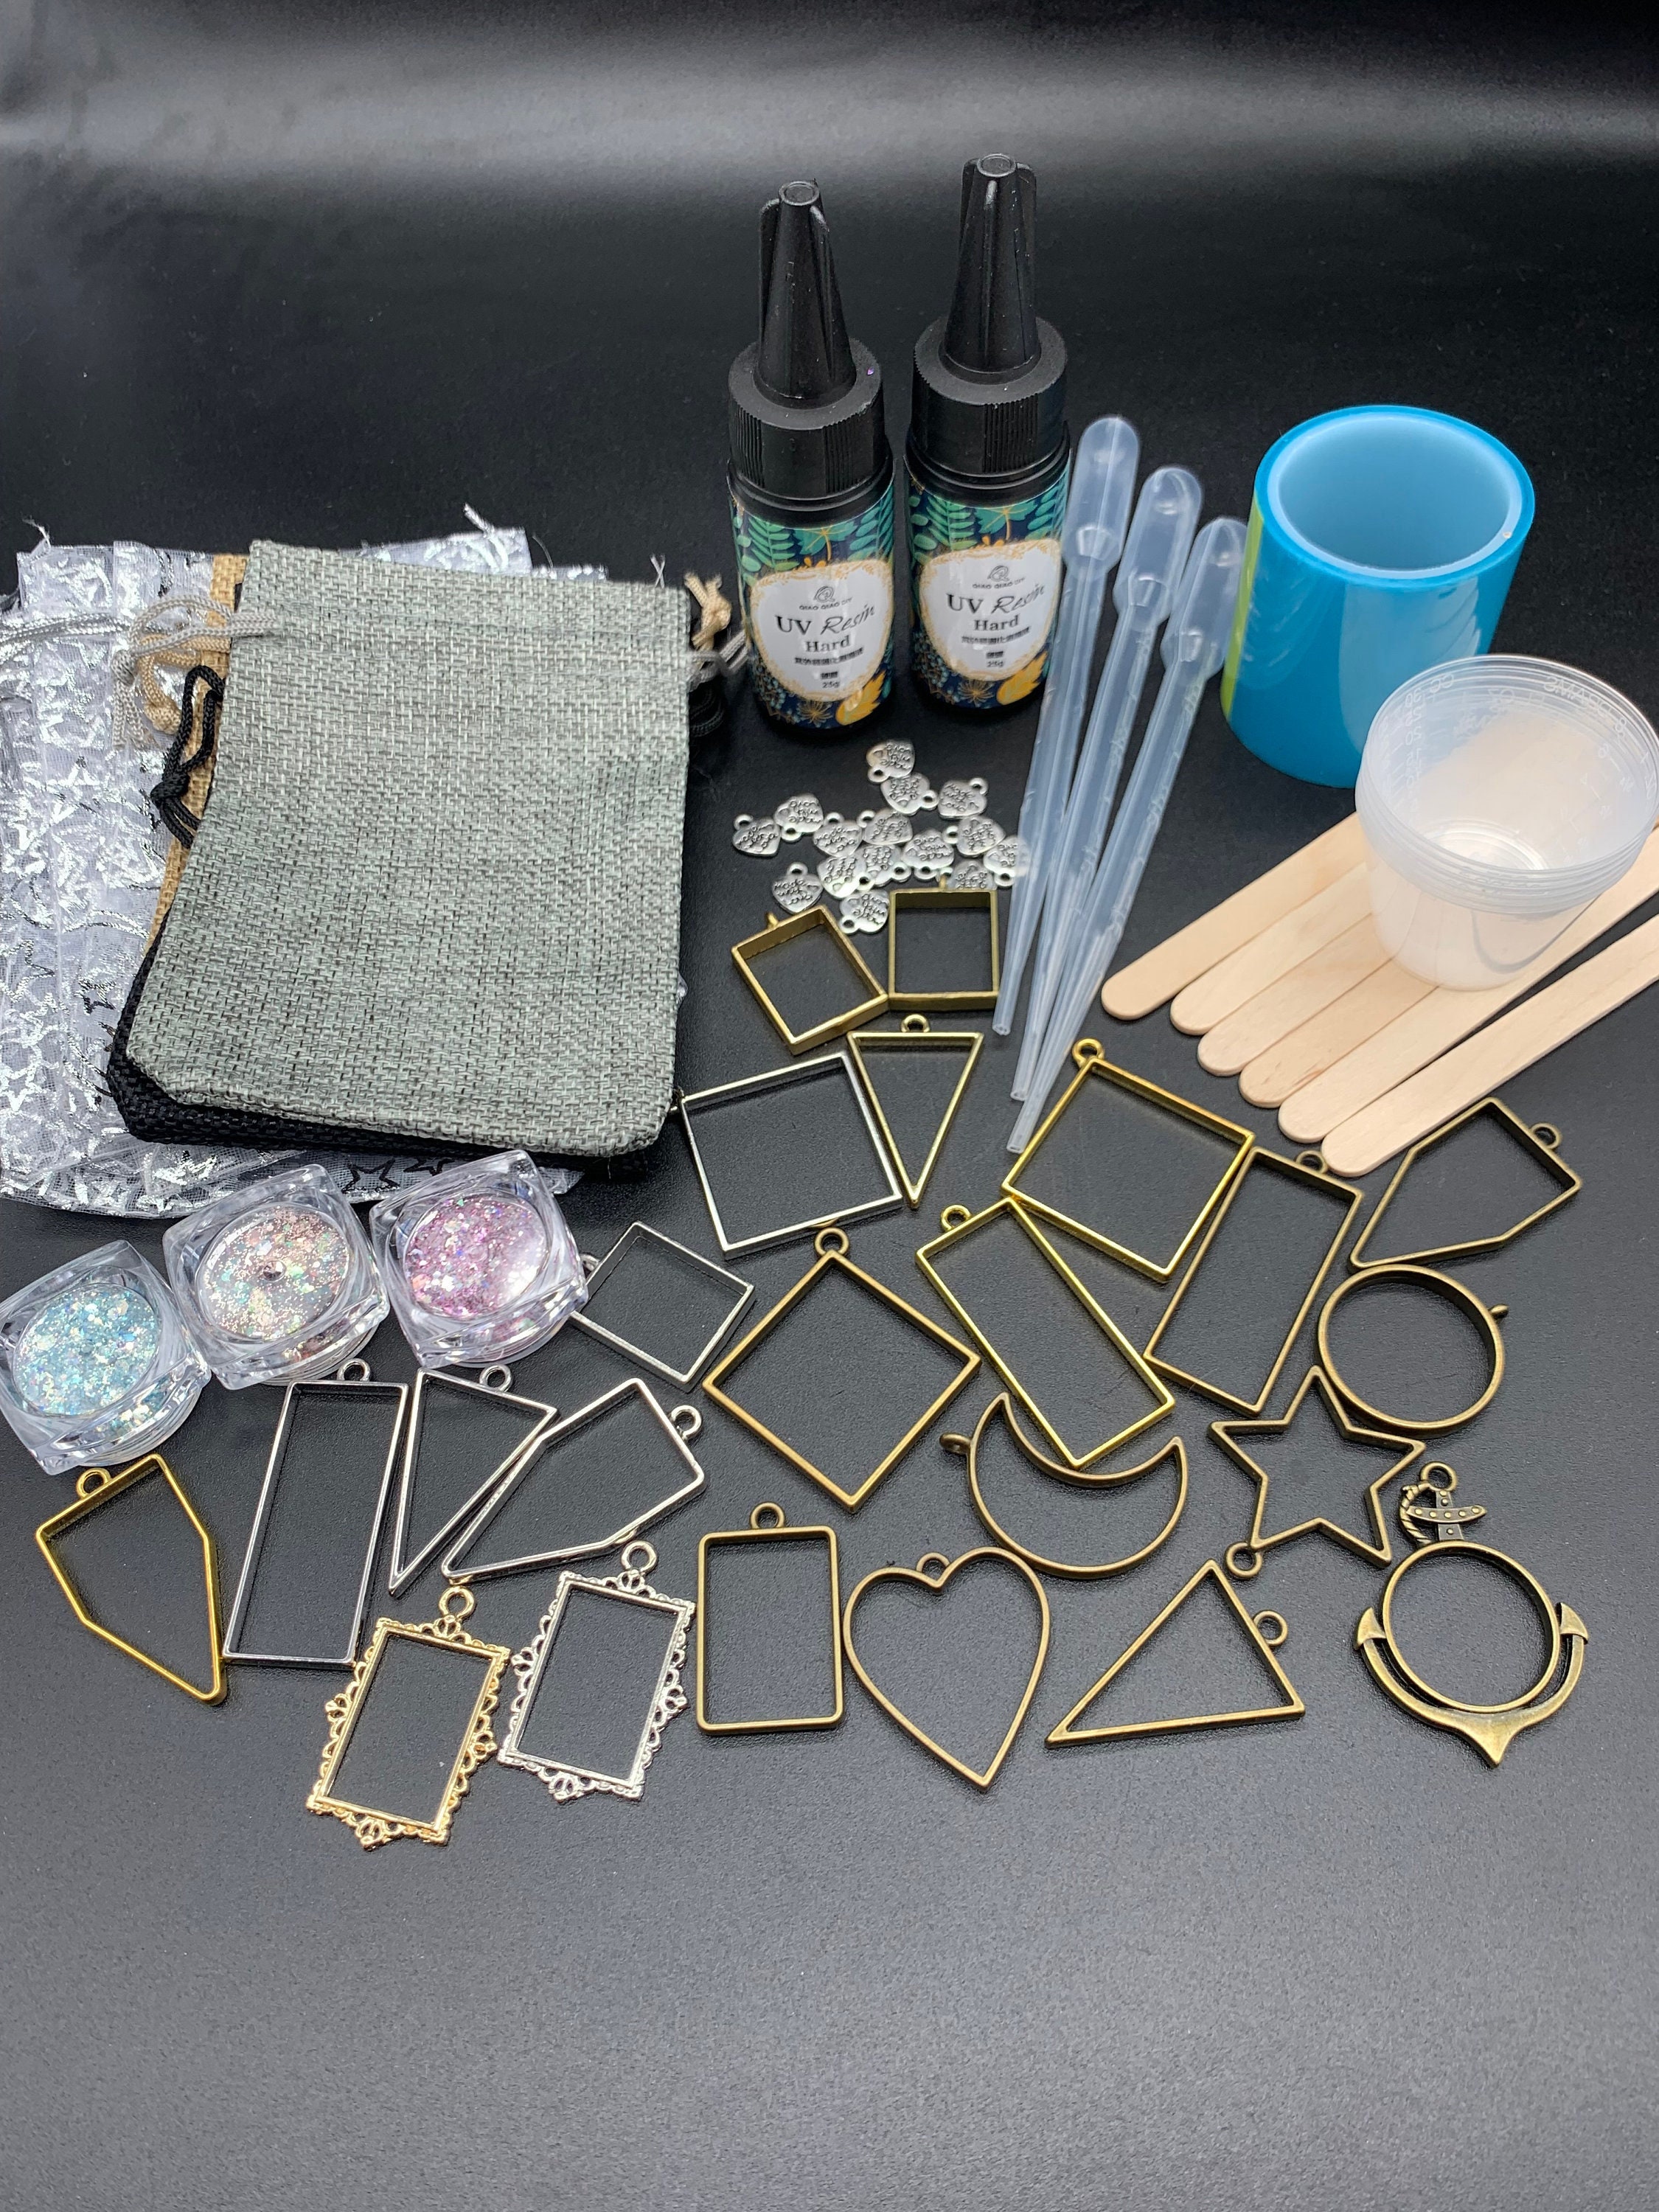 UV Resin Kit with Light,153Pcs Resin Jewelry Making Kit with Highly Clear UV  Resin, UV Lamp, Resin Accessories, Epoxy Resin Starter Kit for Keychain,  Jewelry